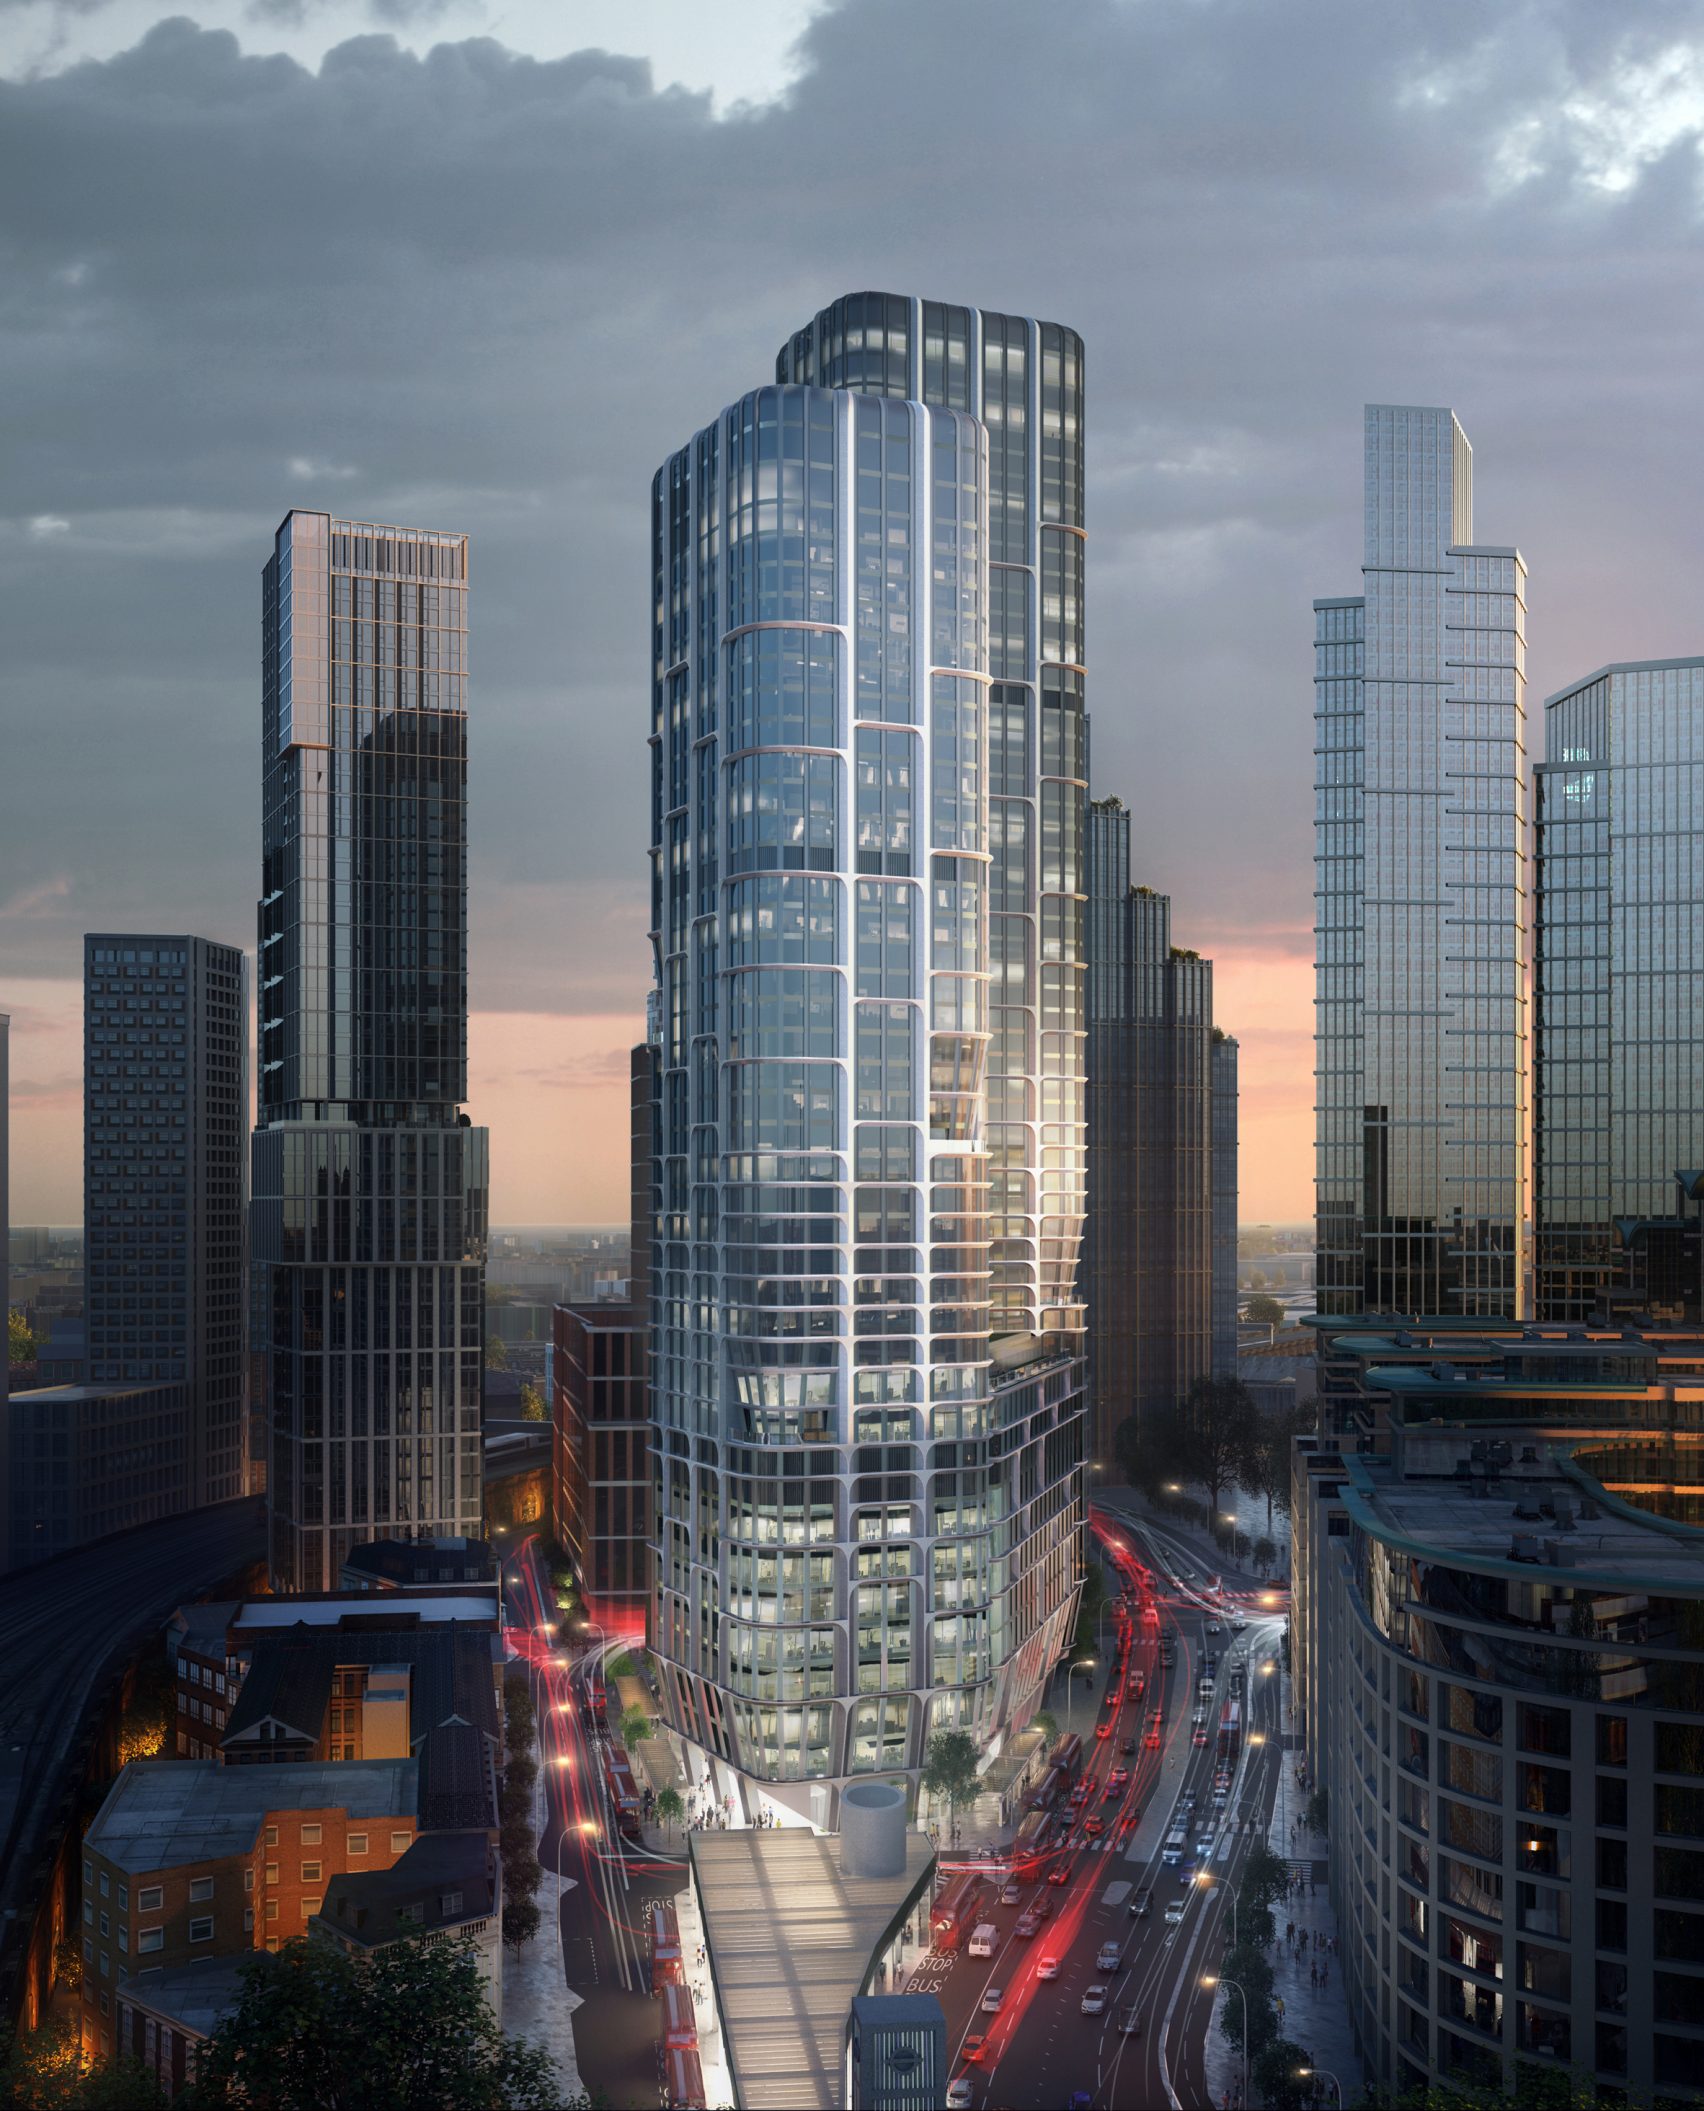 Zaha Hadid Architects' London Skyscrapers Face Public Dispute ...